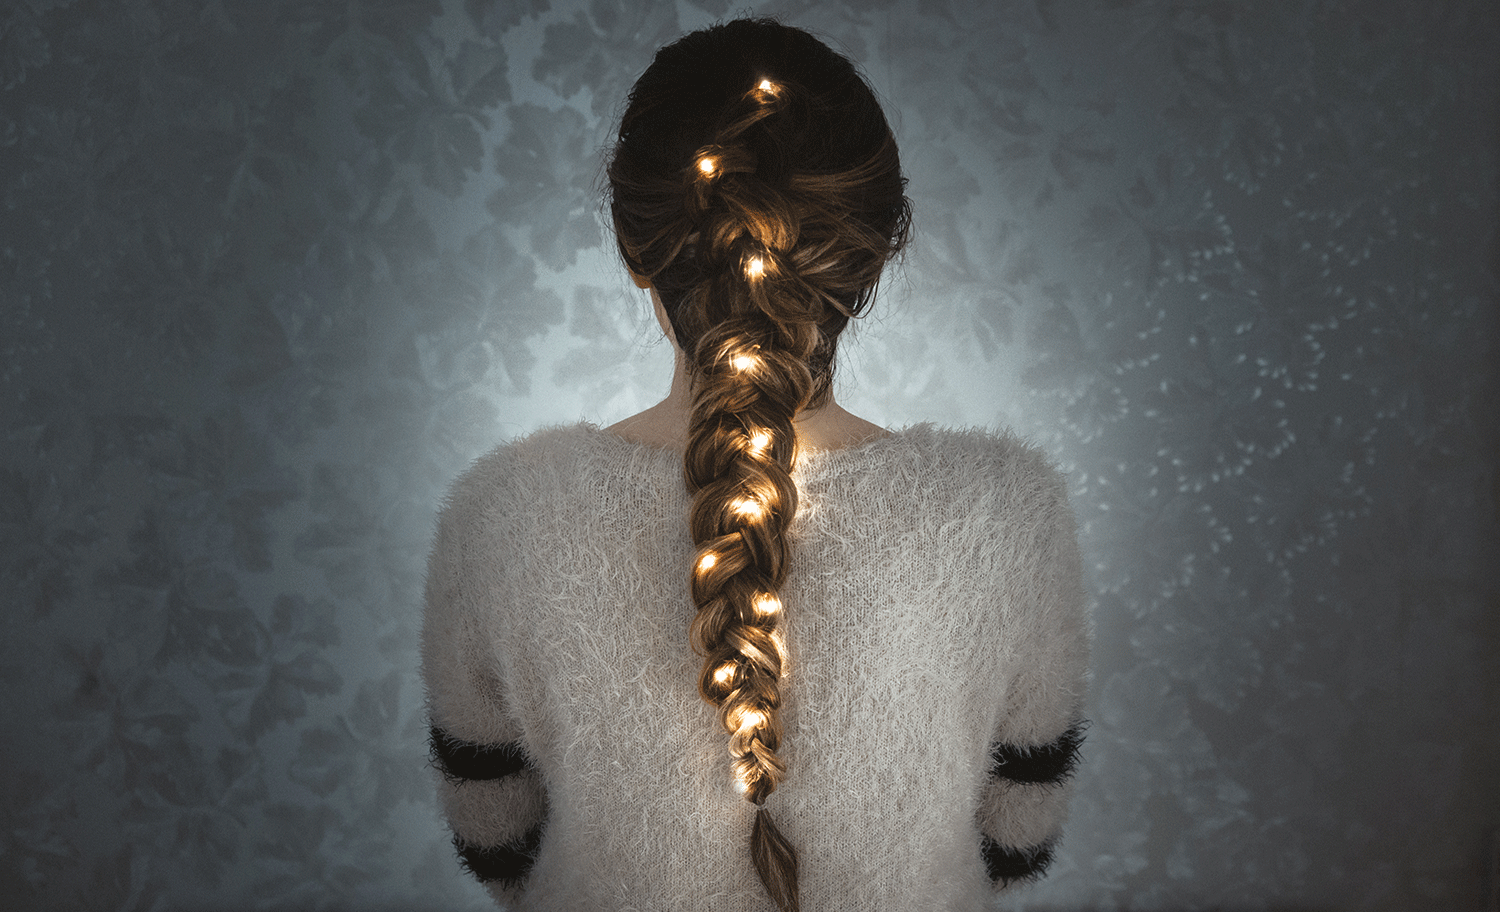  Instagram braid with string lights 